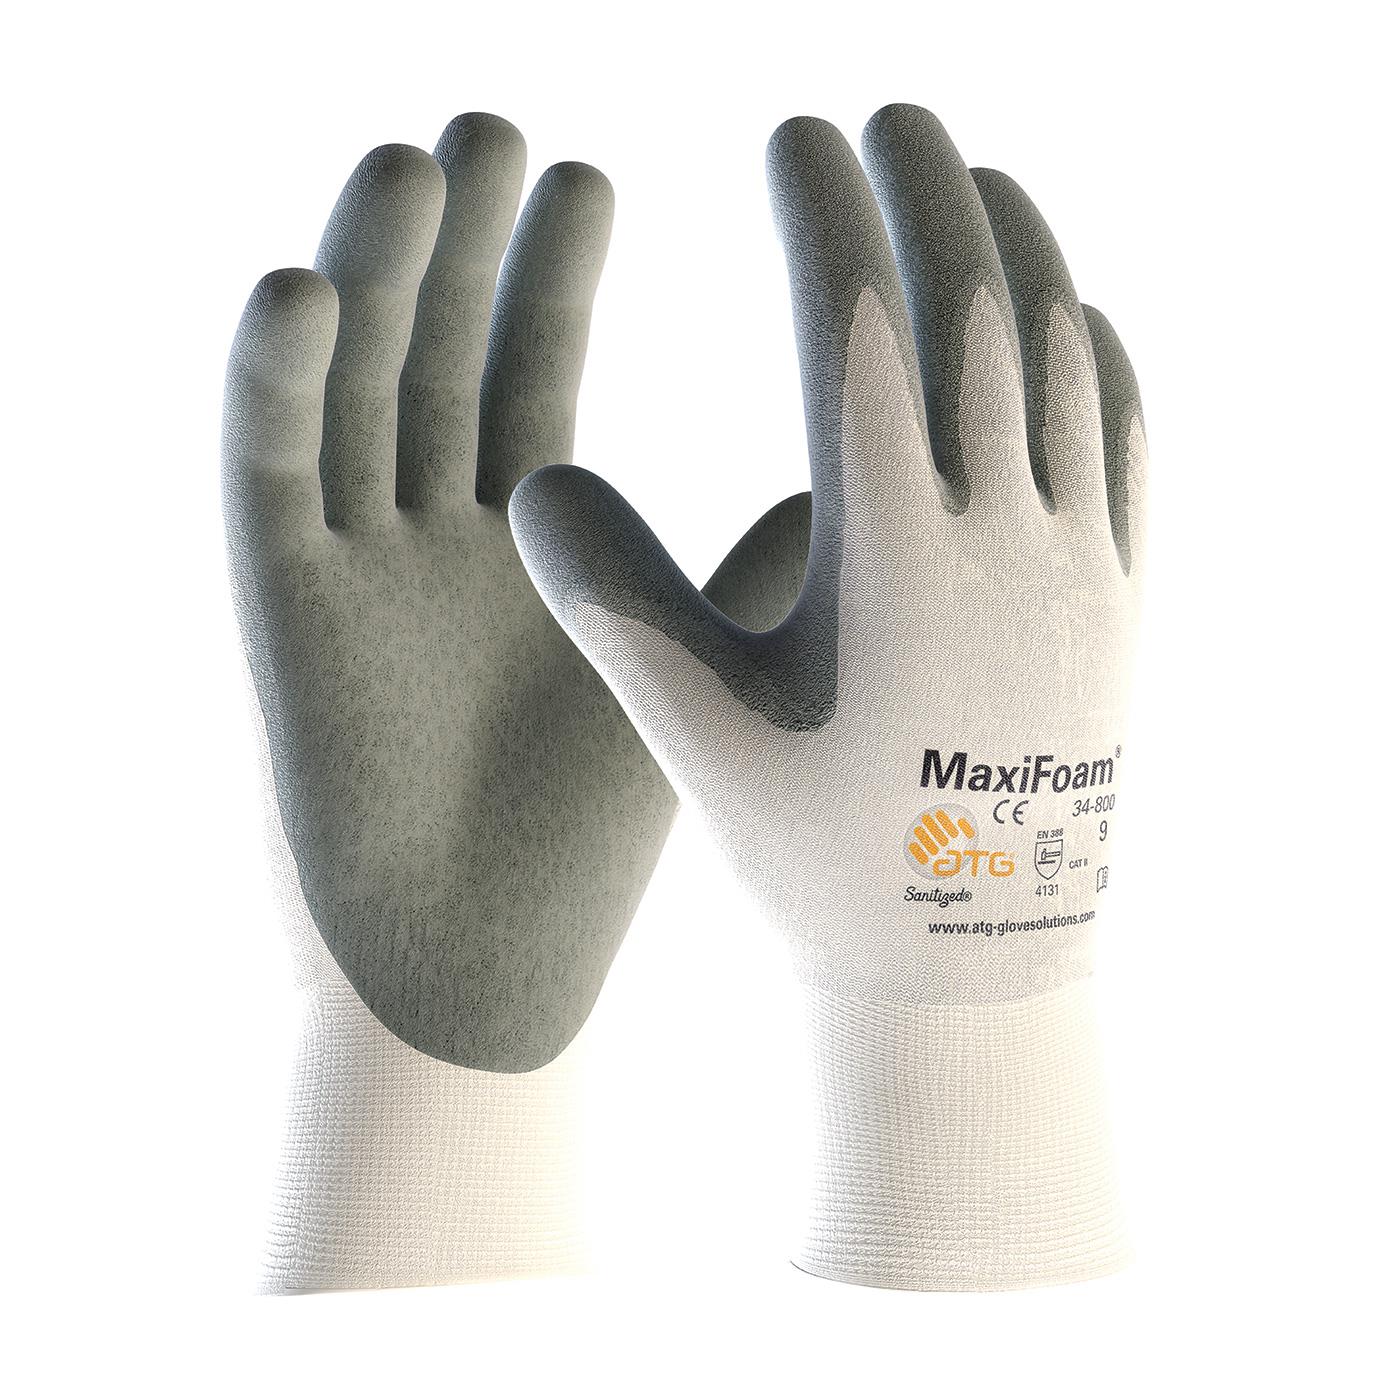 G-TEK MAXIFOAM FOAM NITRILE PALM COAT - Nitrile Coated Gloves